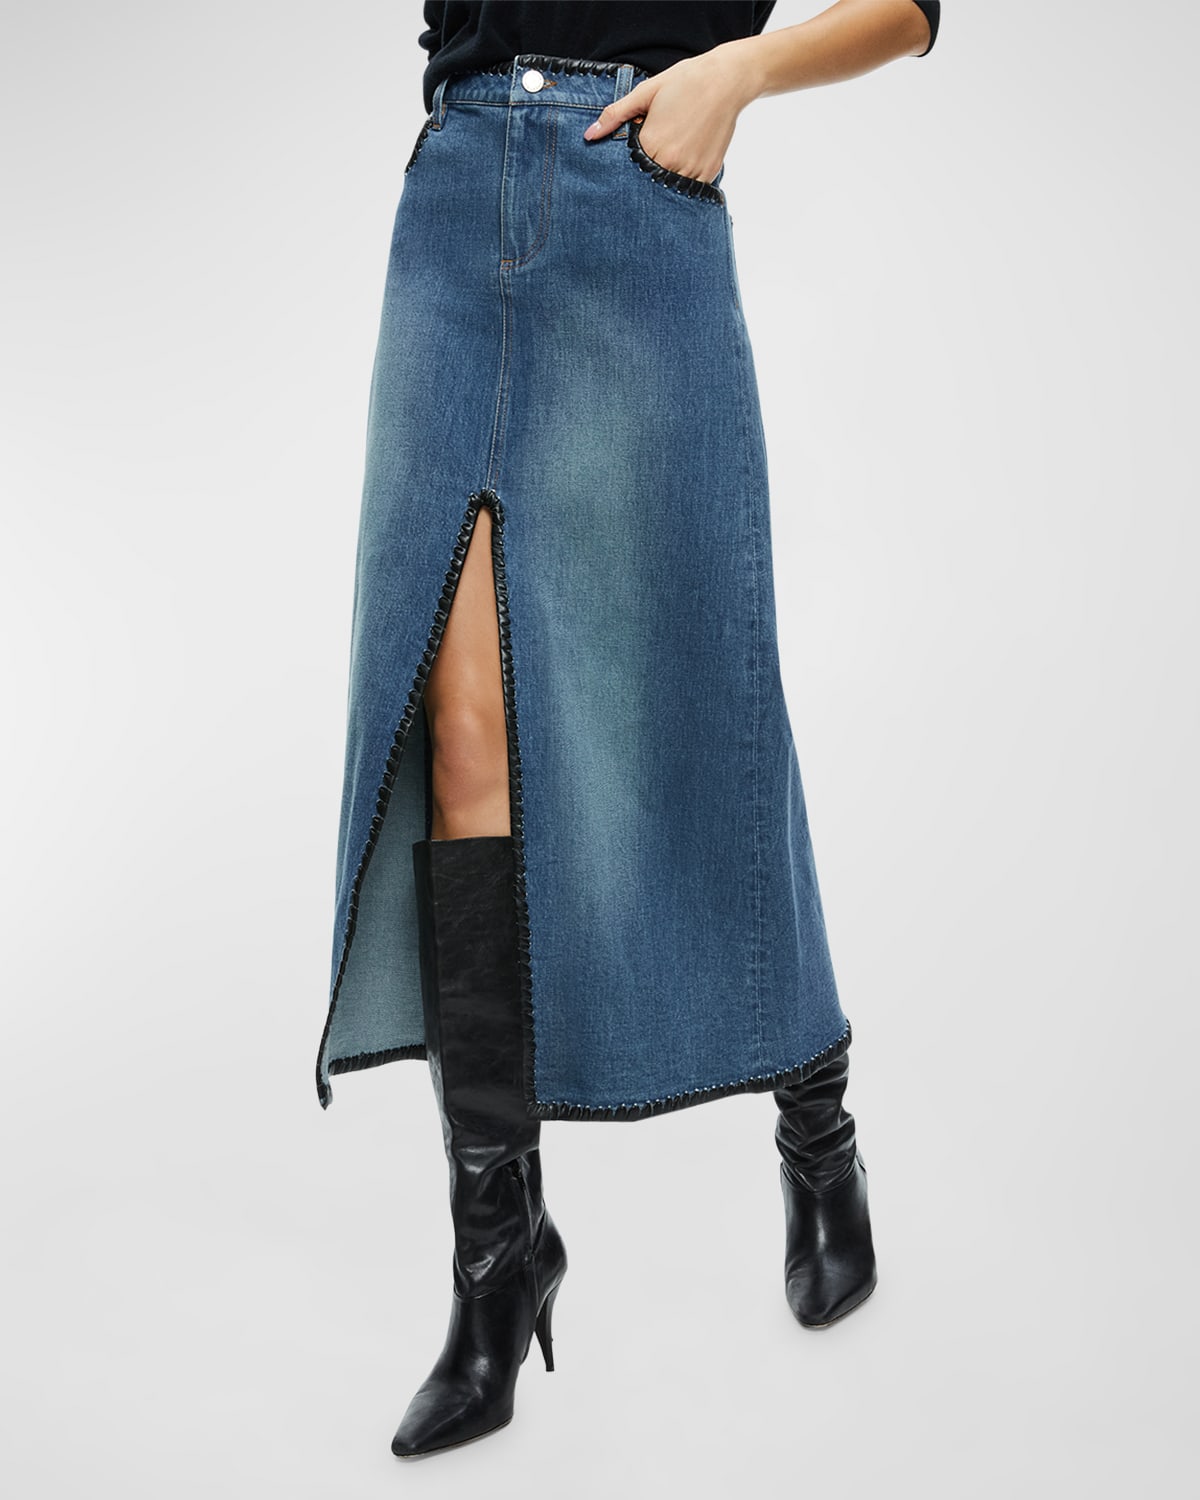 Alice And Olivia Rye Denim Maxi Skirt With Vegan Leather Trim In Lola Blue/black